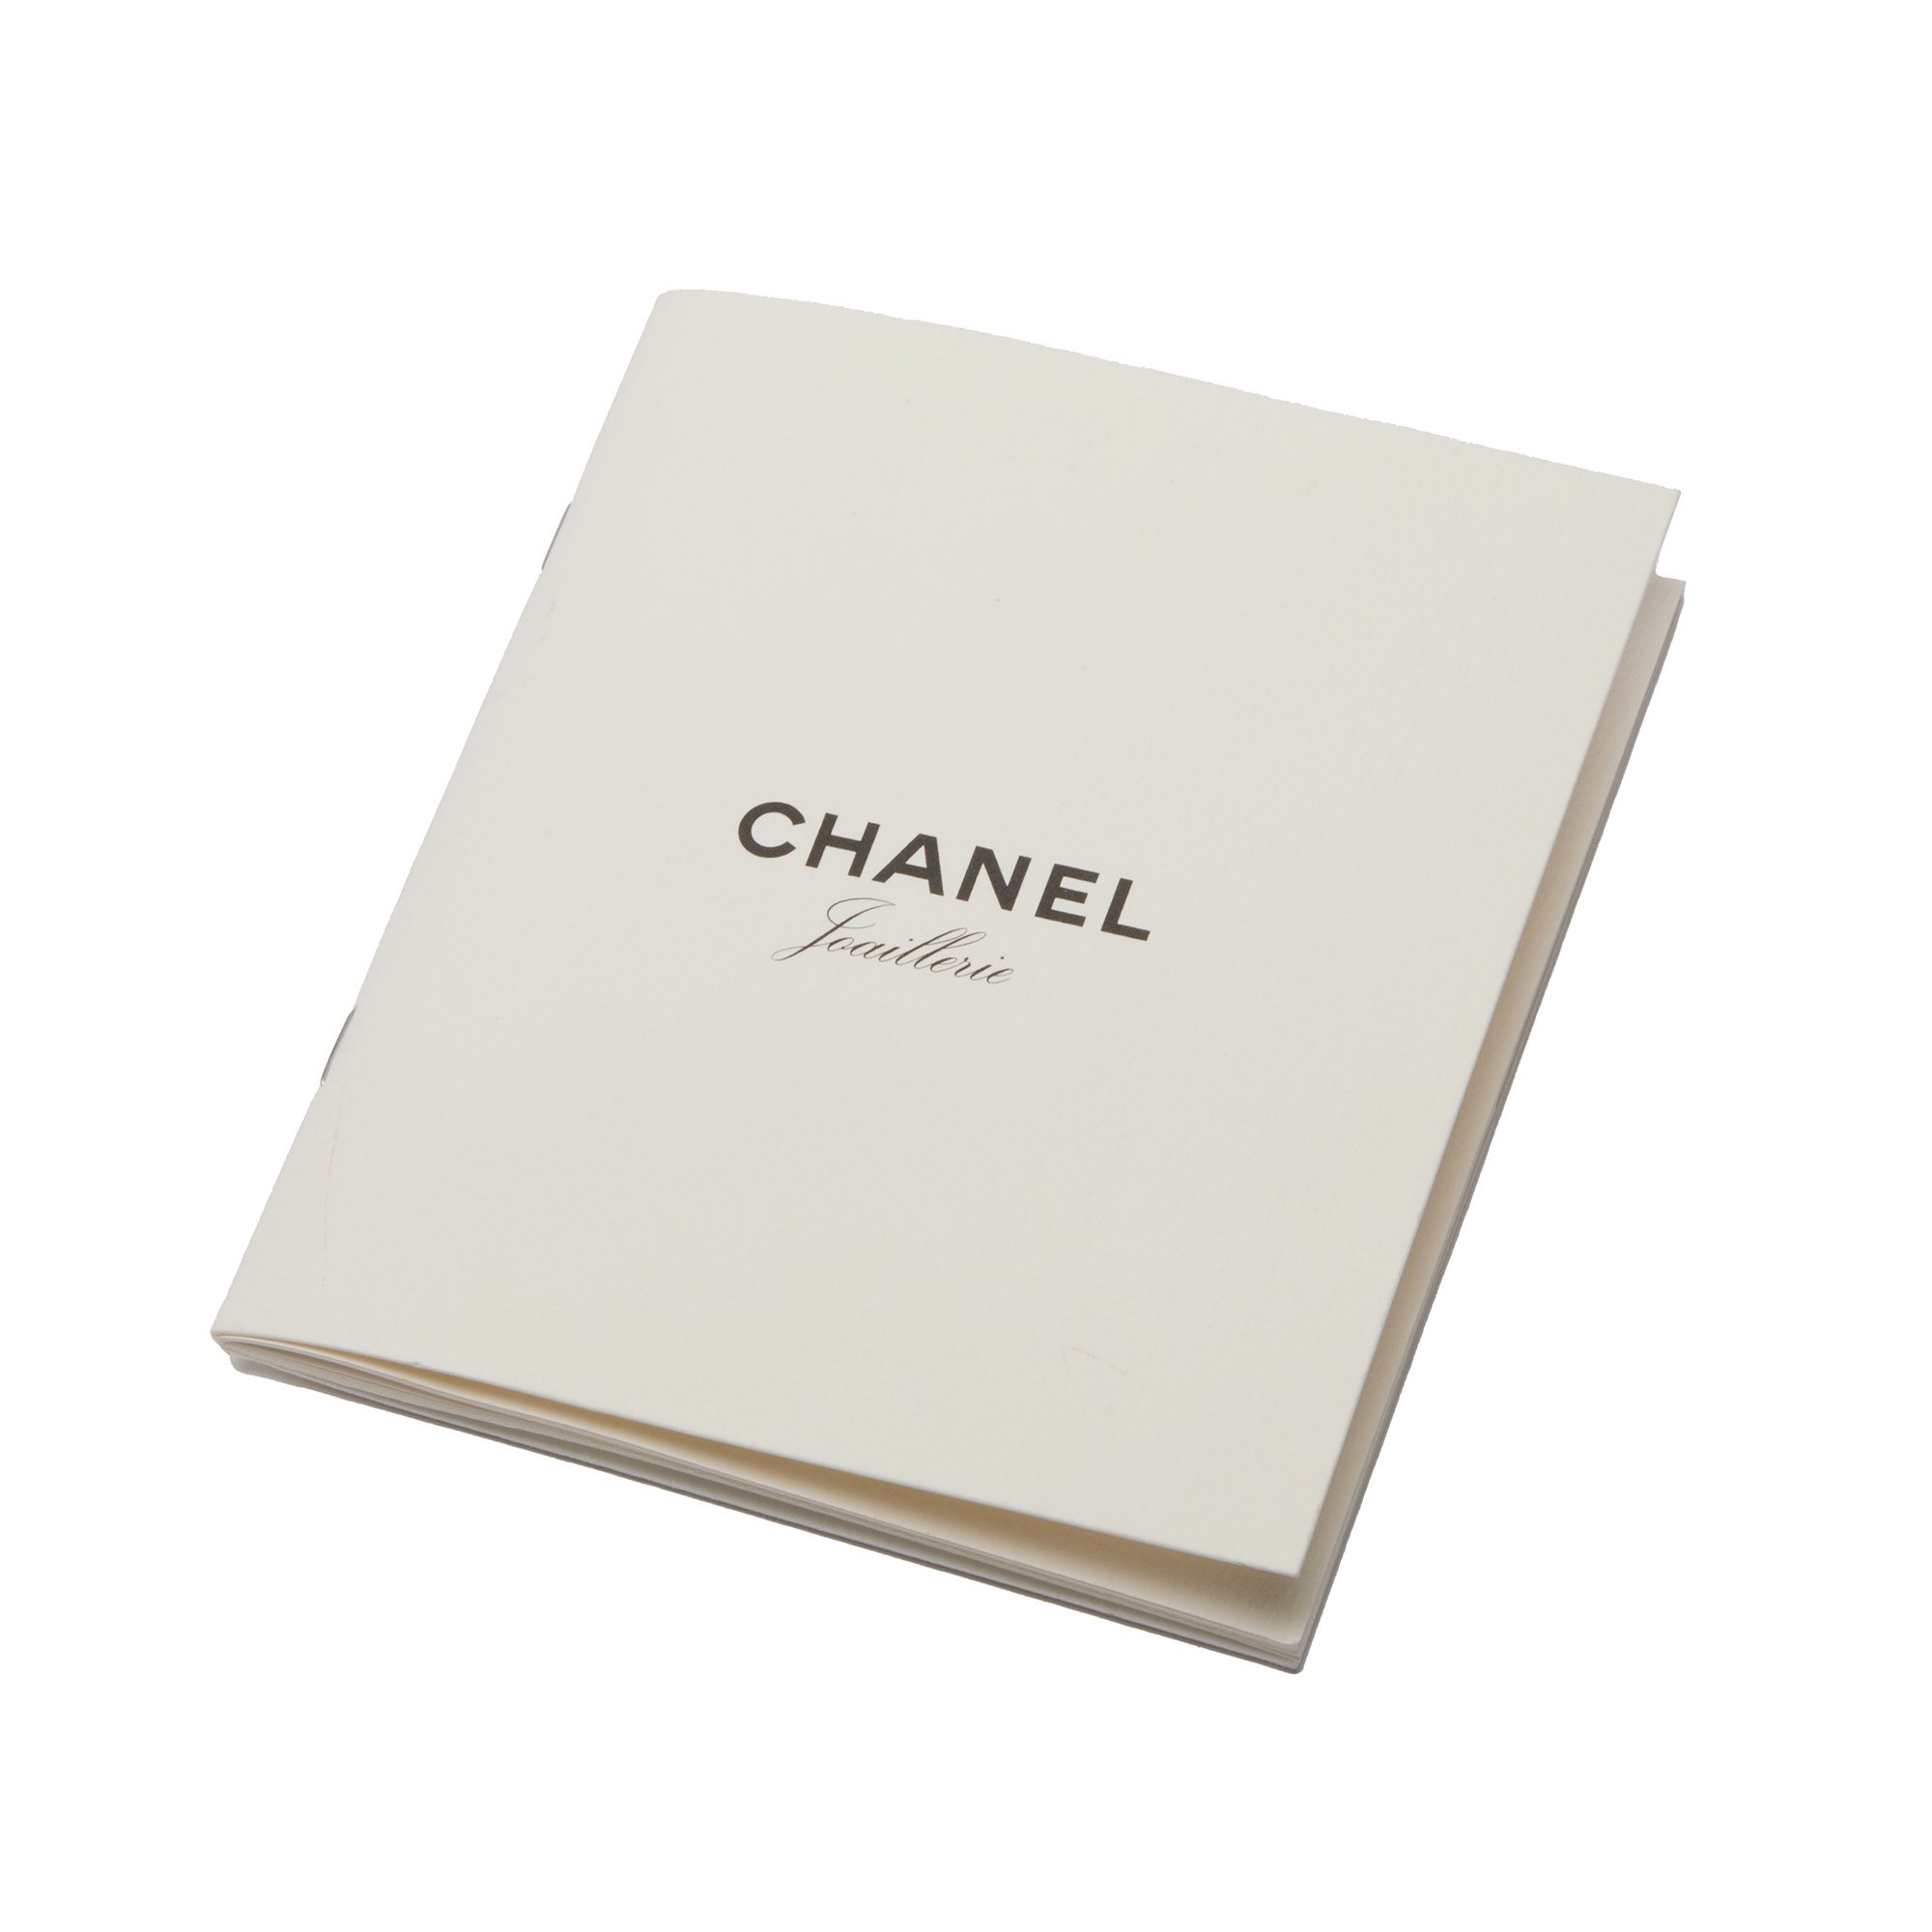 Chanel 18ct White Gold Door Charm